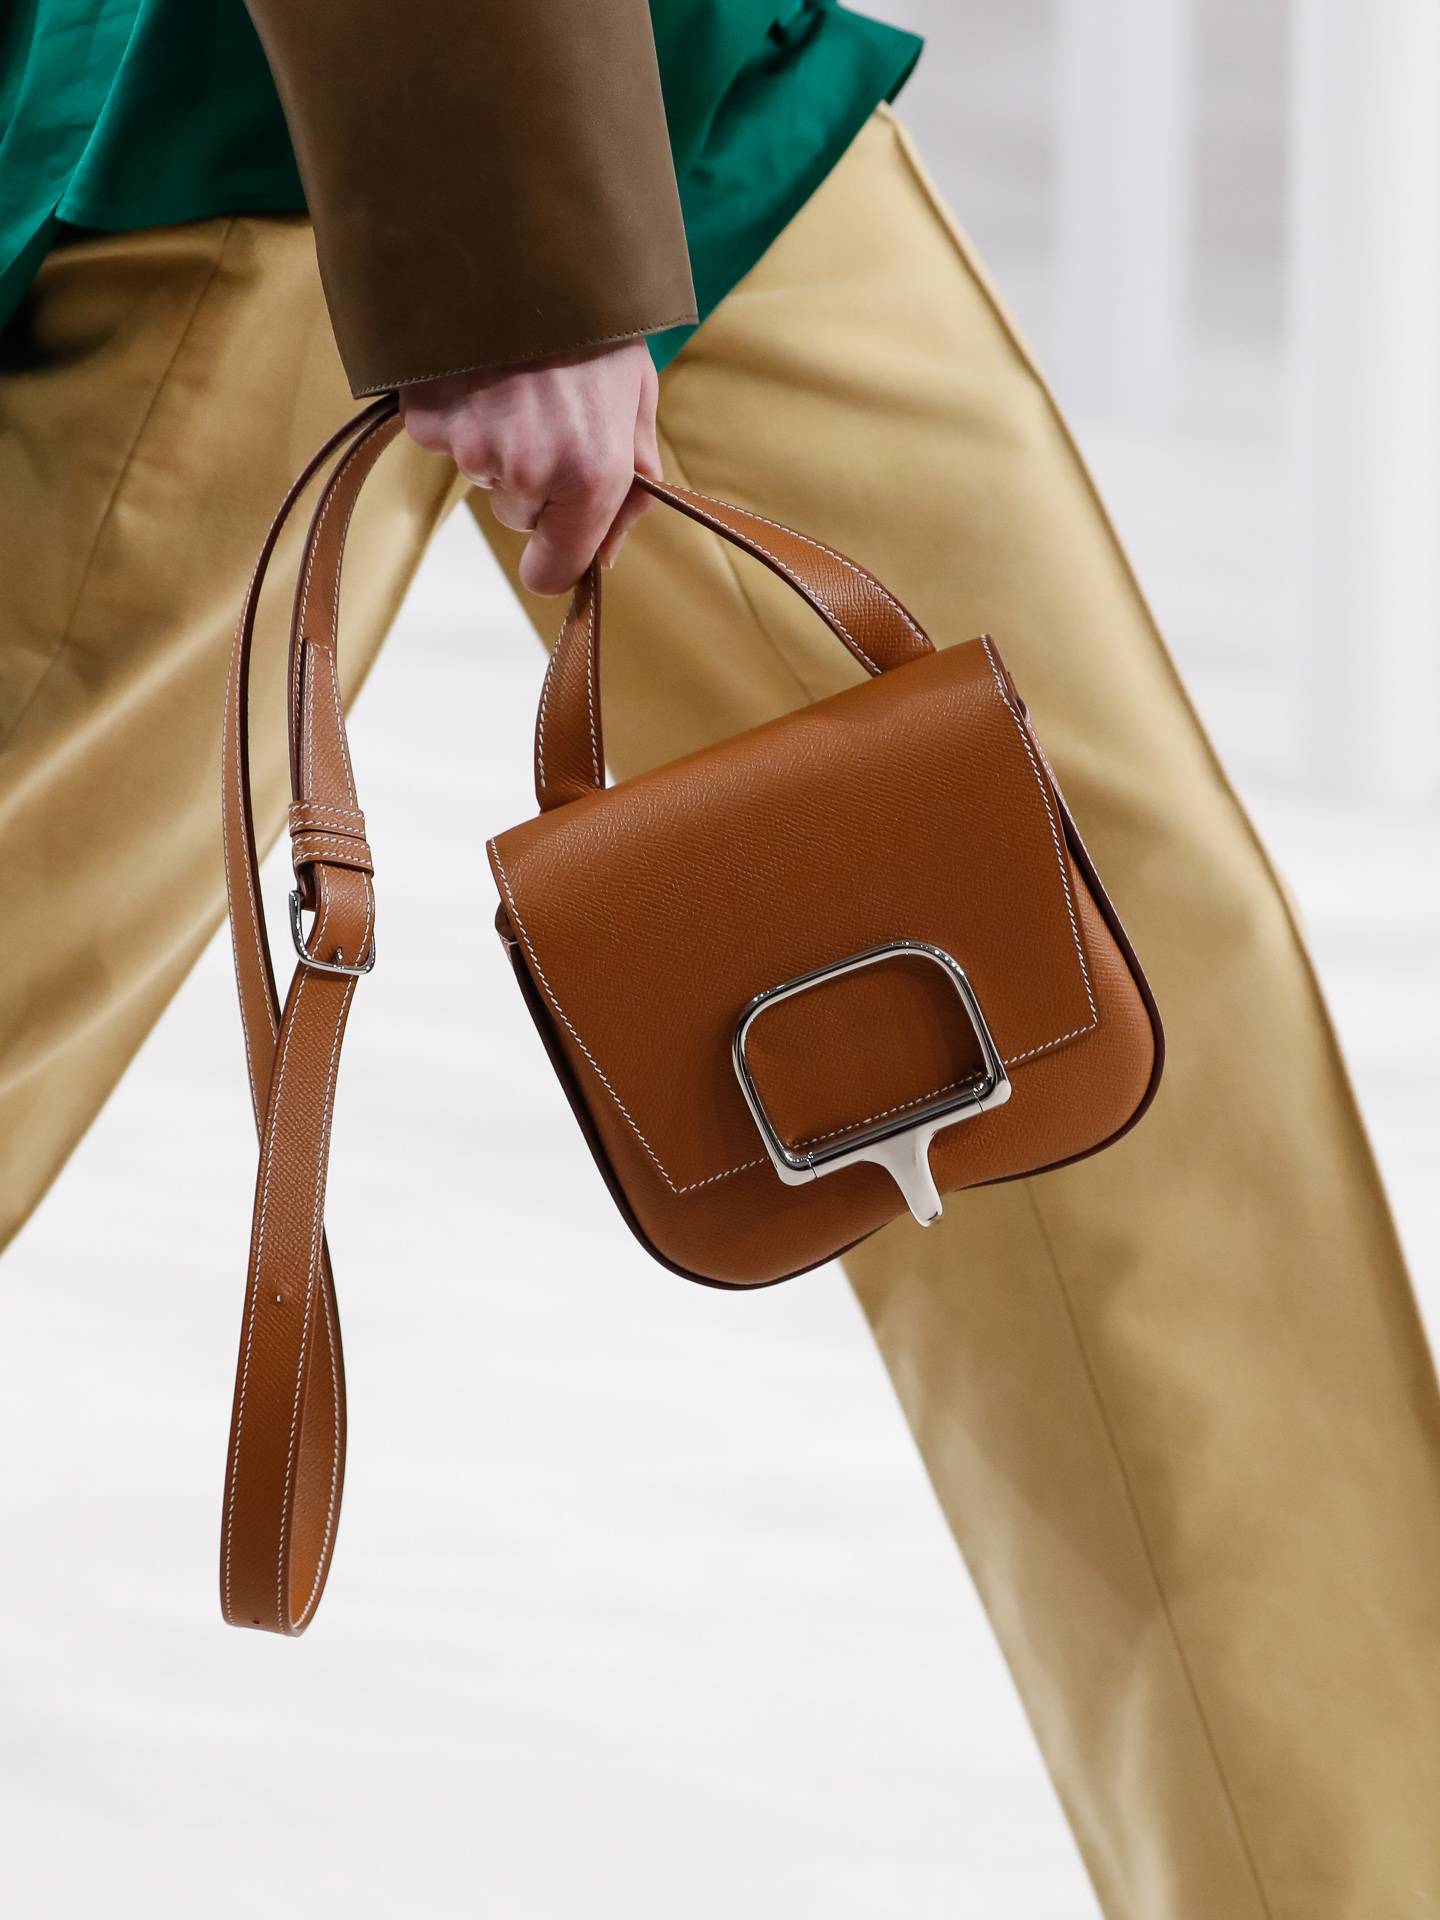 Hermes 手袋2020 年大熱︱6 個一定要知的百搭袋款 | Fashion | Madame Figaro Hong Kong